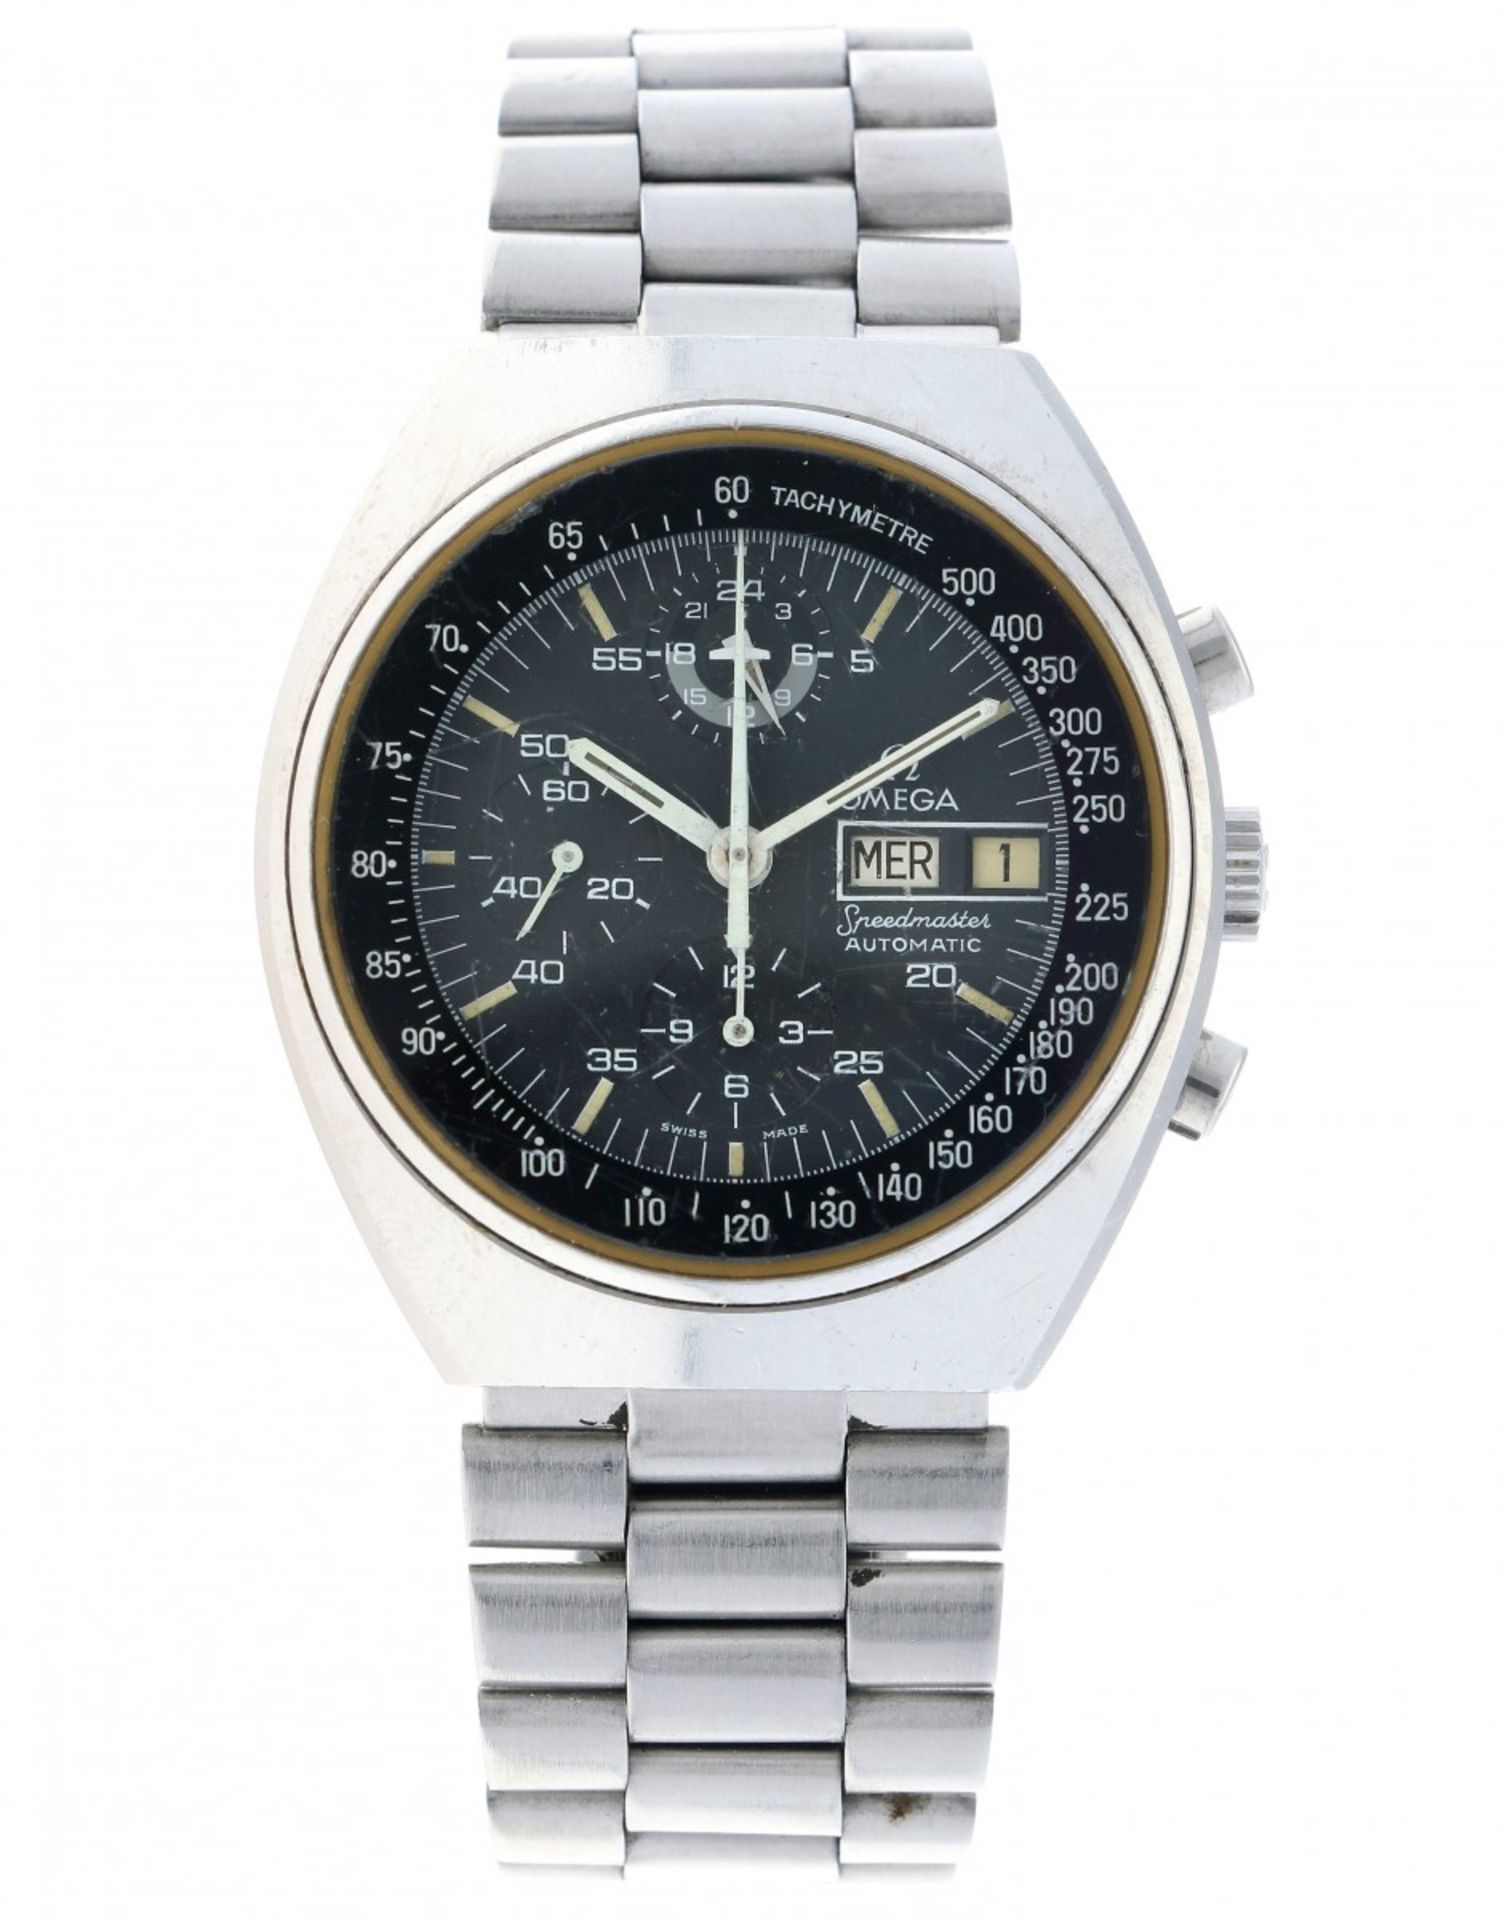 Omega Speedmaster mark 4.5 176.0012 - Men's watch - Approx. 1975.